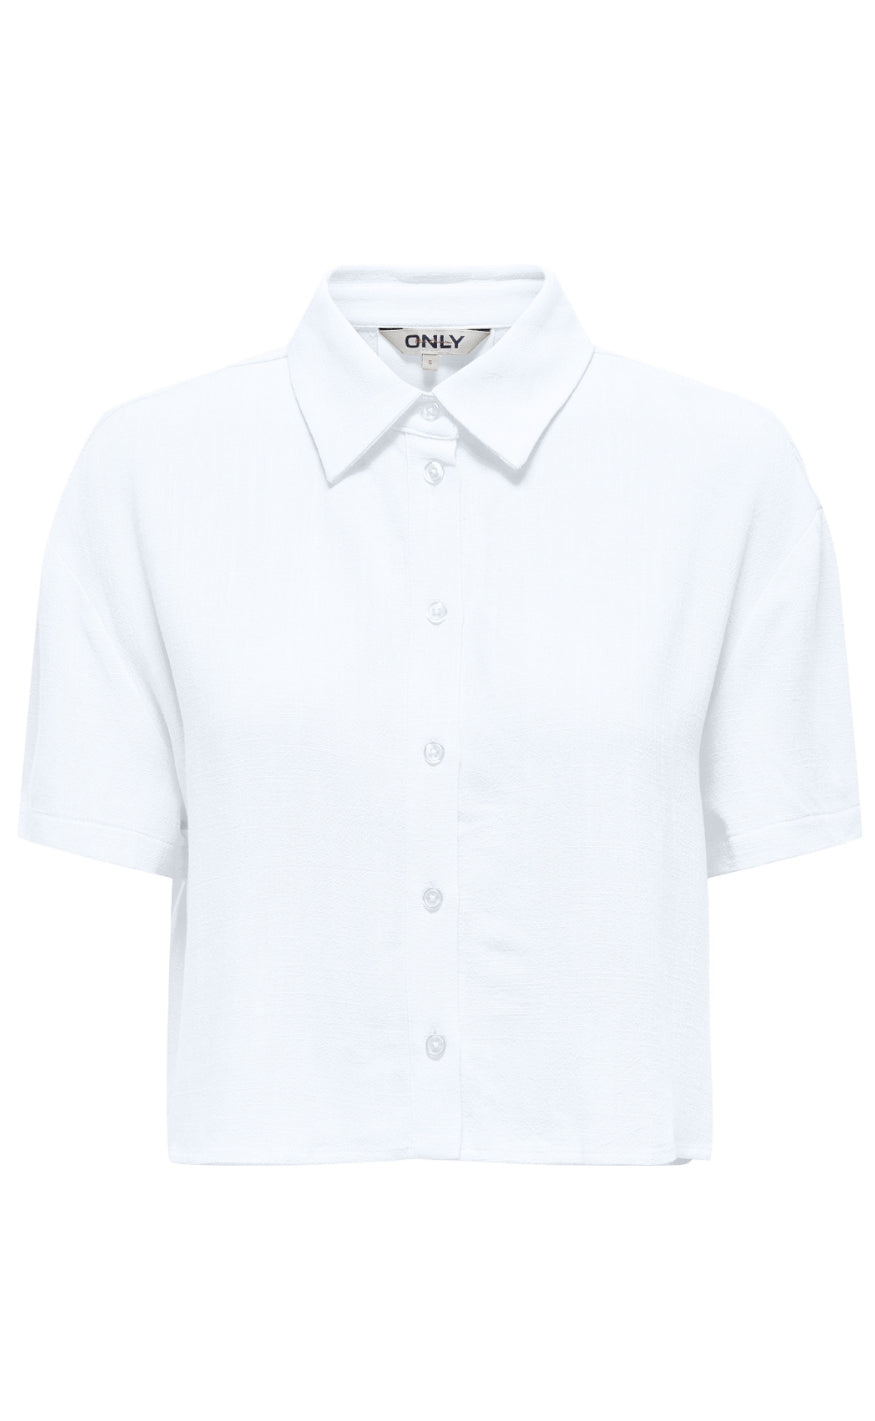 Se ONLY Skjorte - Siesta - Bright White hos Mulieres.dk